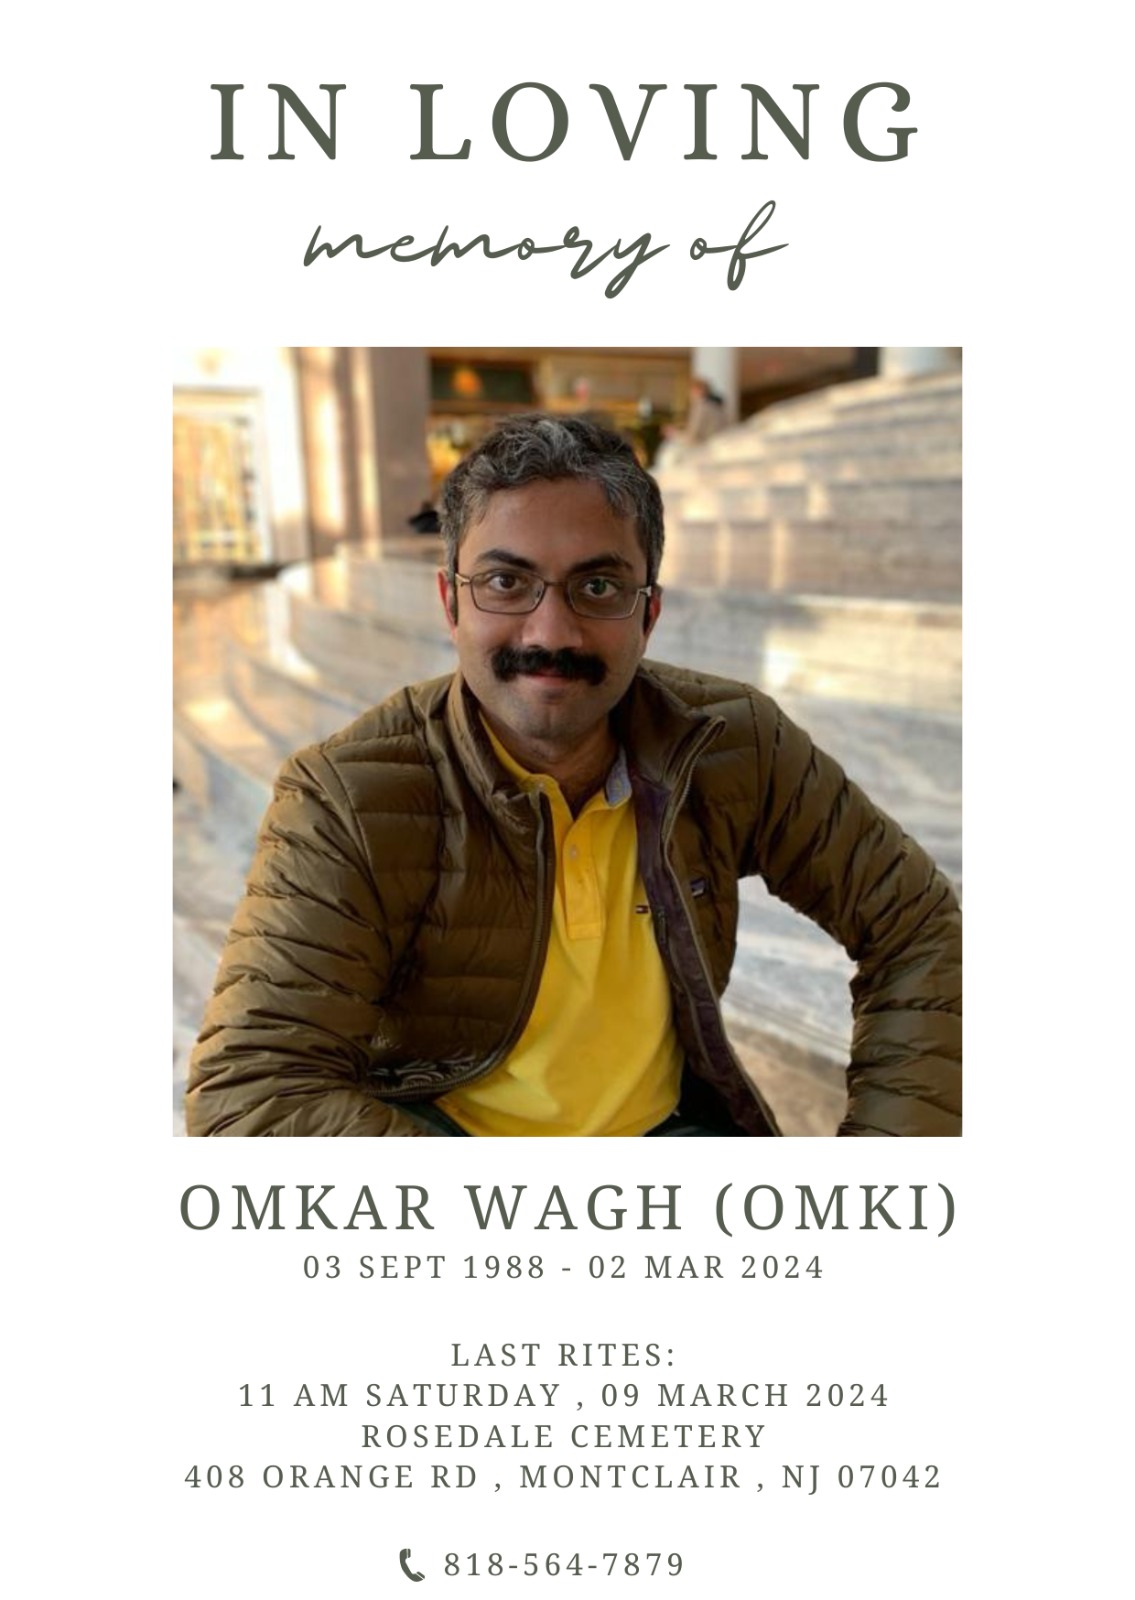 Omkar Wagh, 09 March 2024